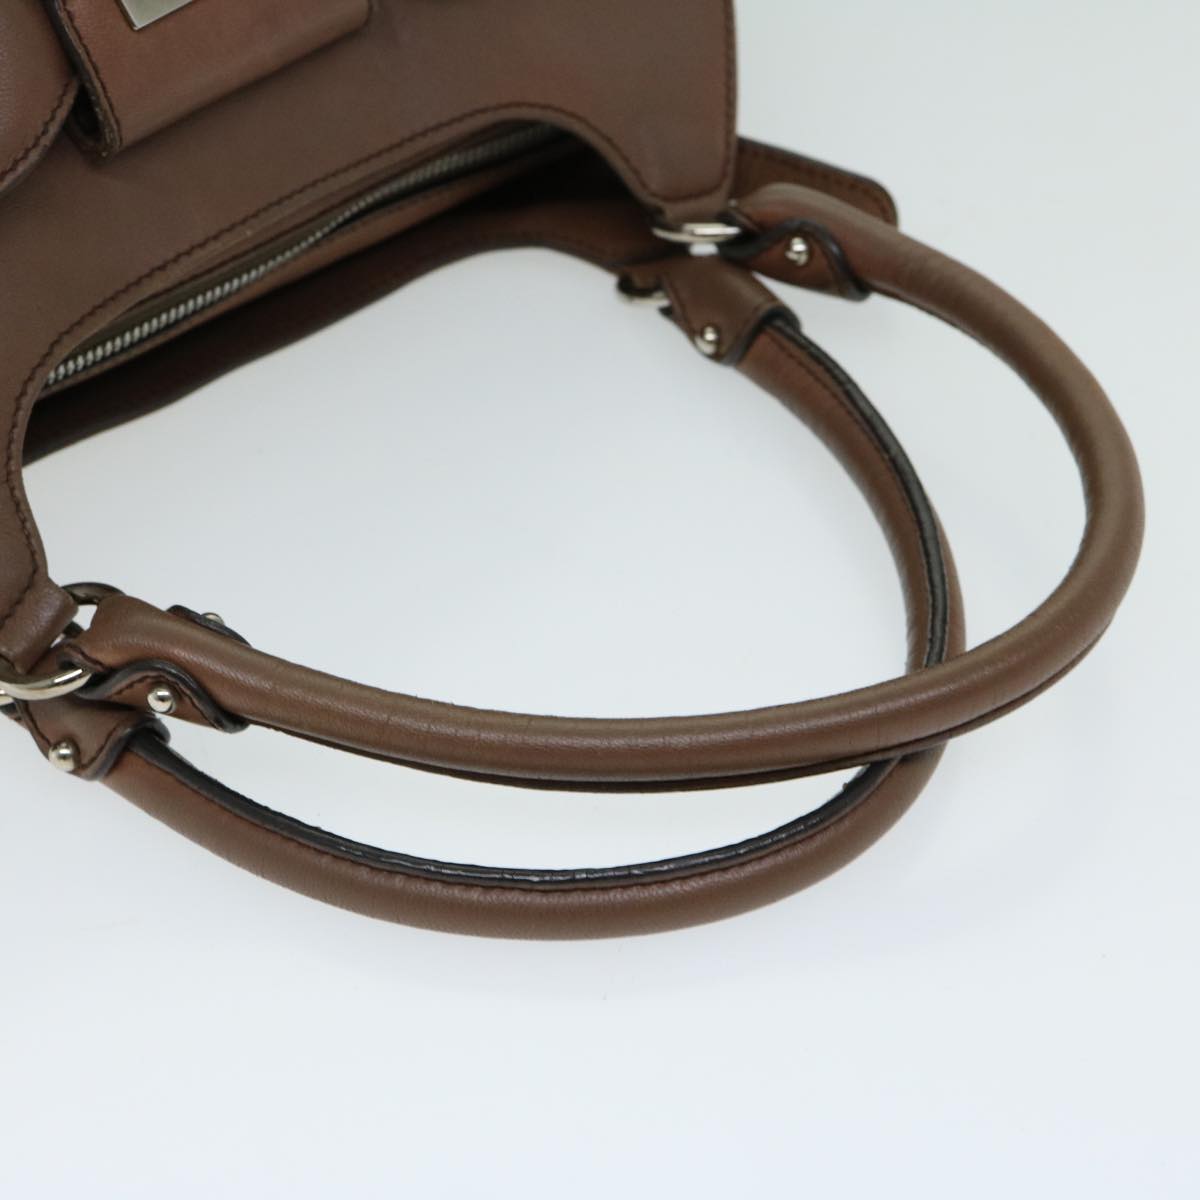 Salvatore Ferragamo Gancini Hand Bag Leather Brown Auth 66248